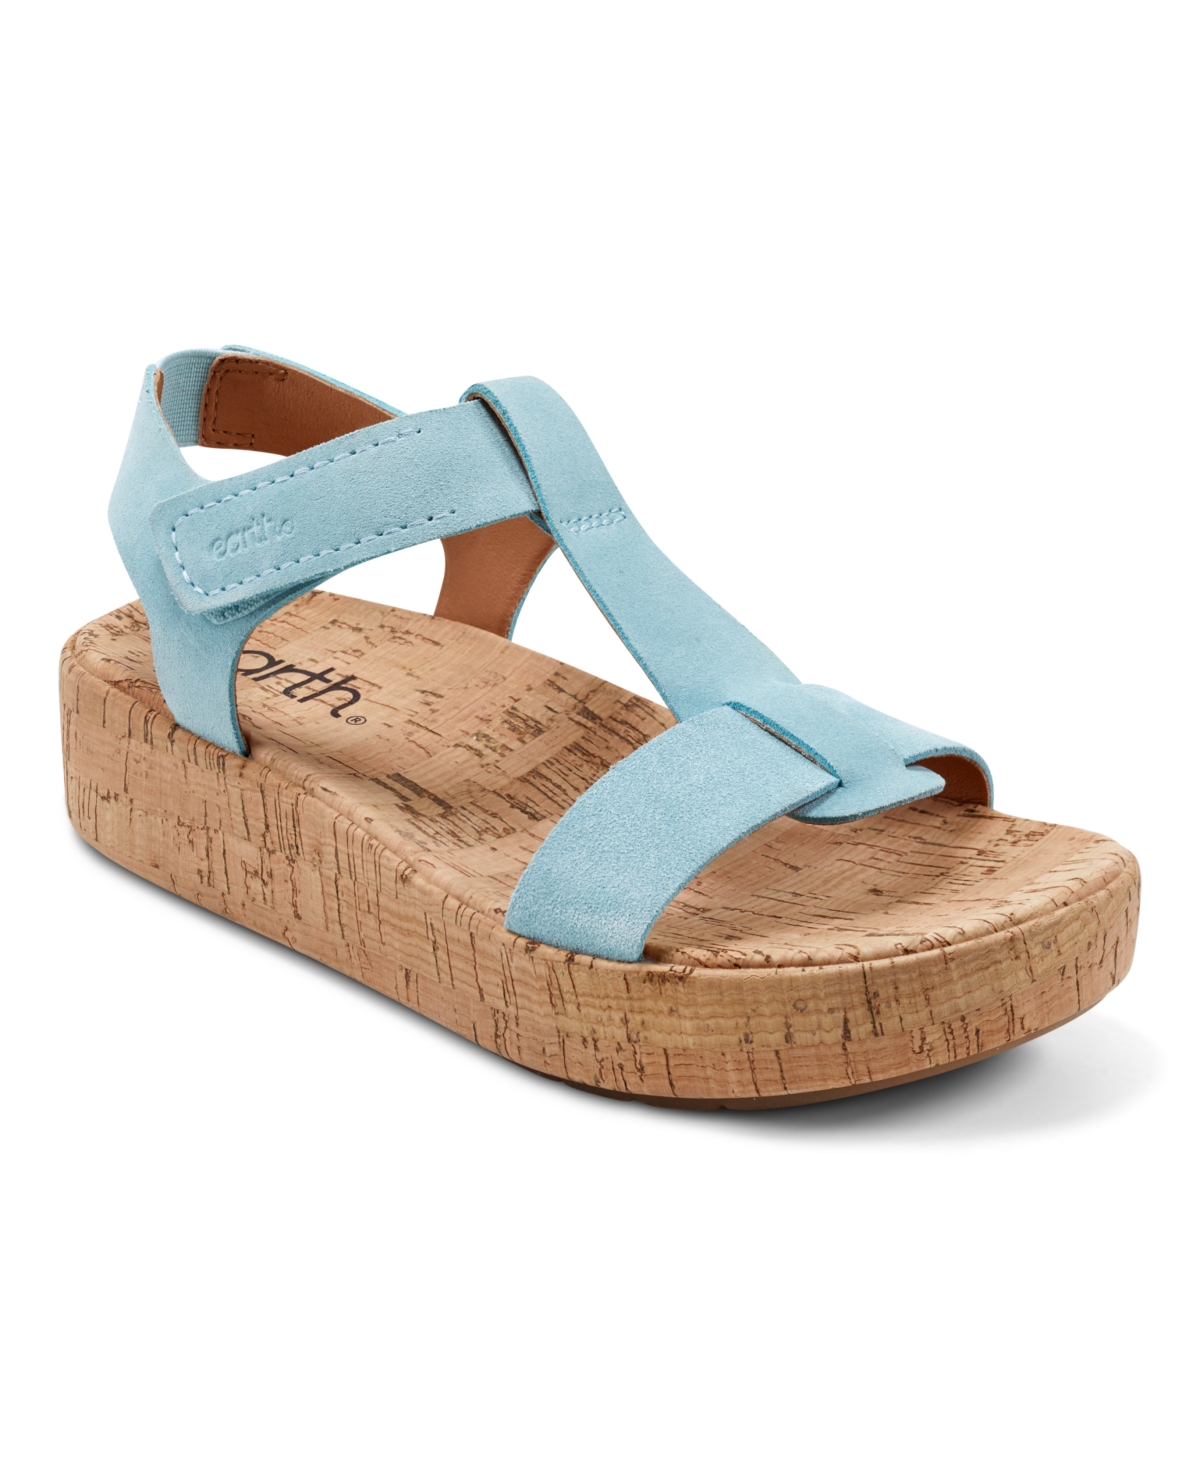 Earth Women's Shari T-Strap Platform Casual Wedge Sandals - Light Blue Suede